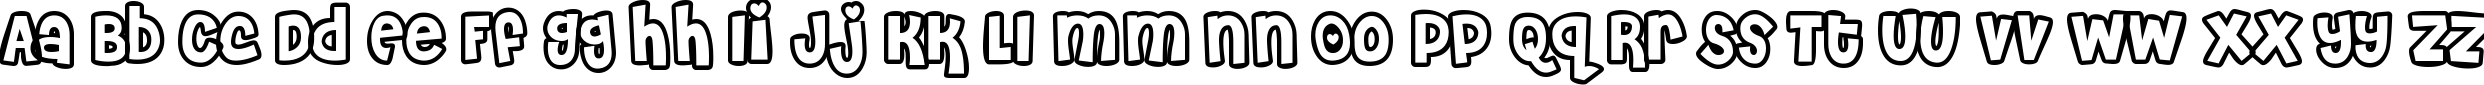 Пример написания английского алфавита шрифтом Cheri Liney